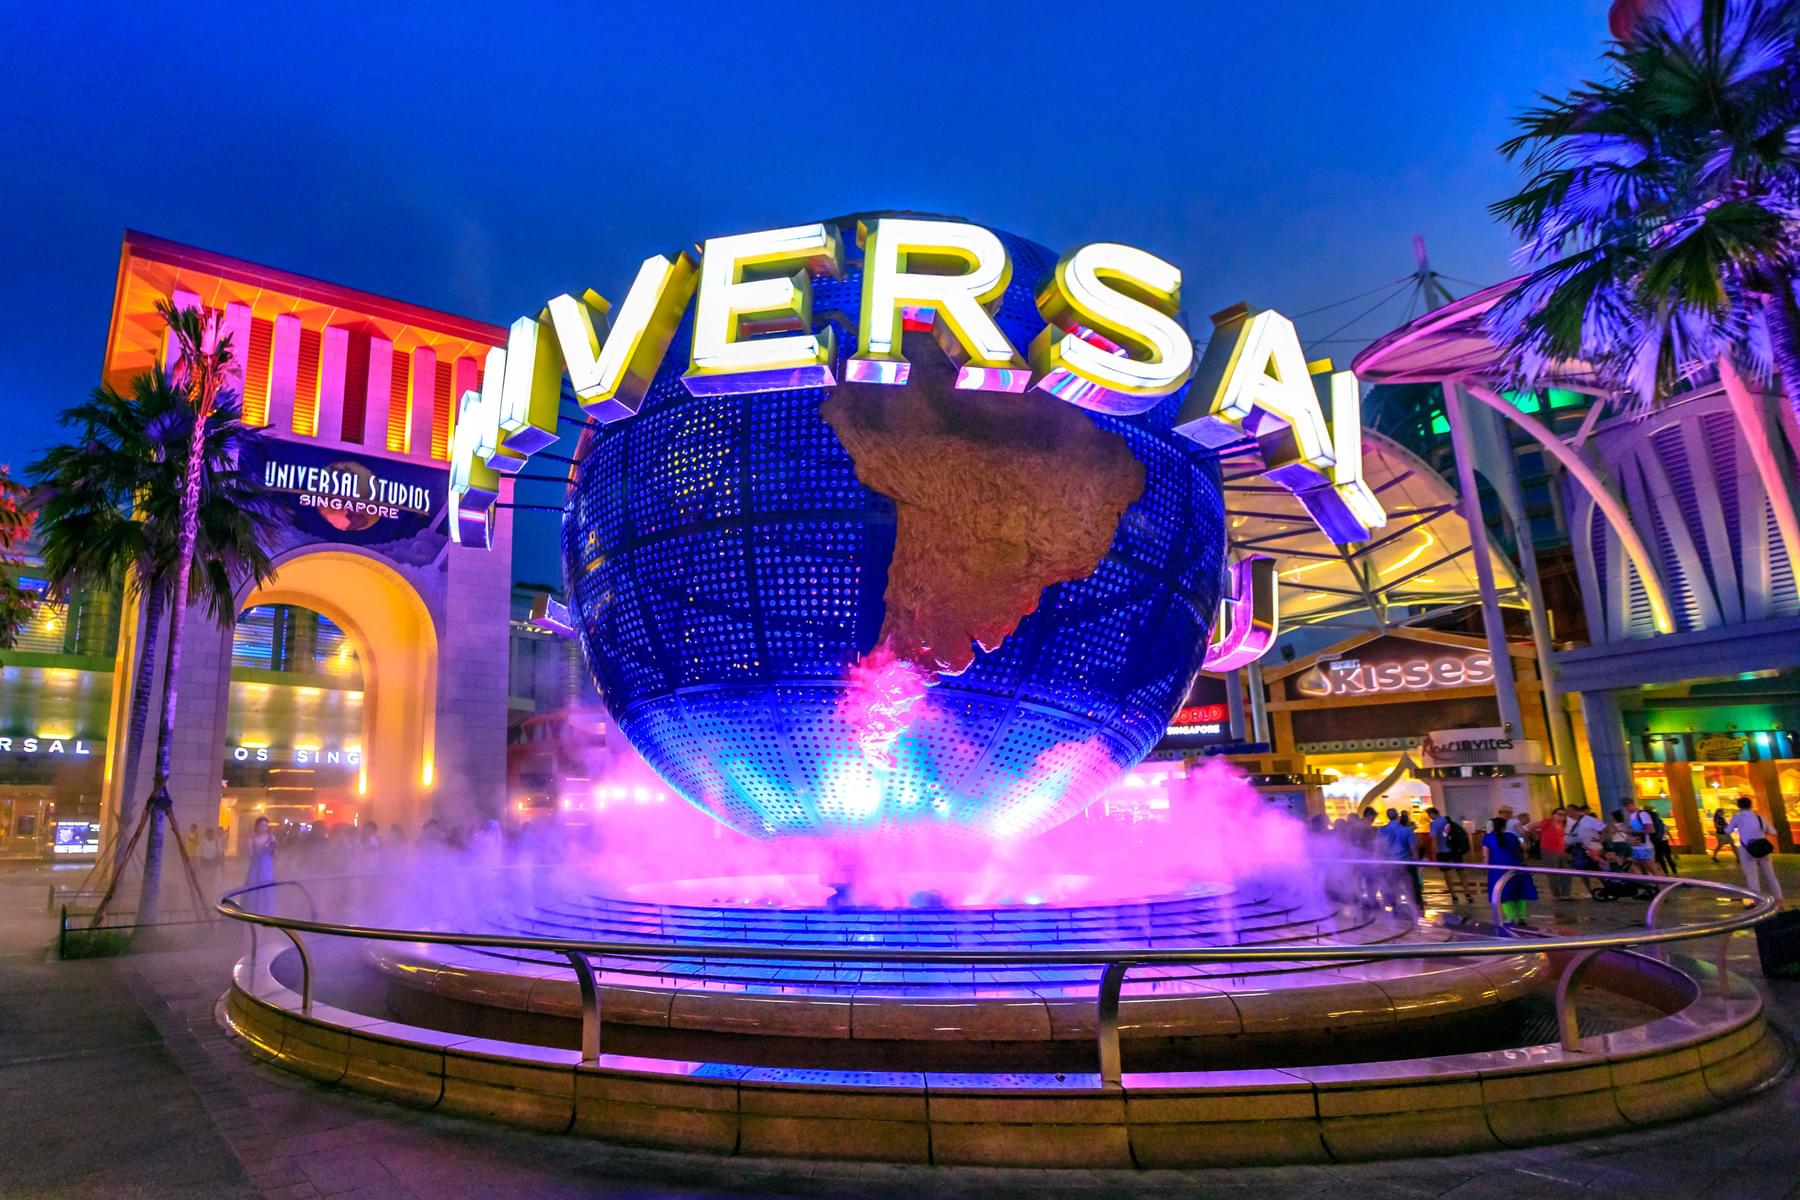 Universal Studios Singapore Triple Thrills Pass